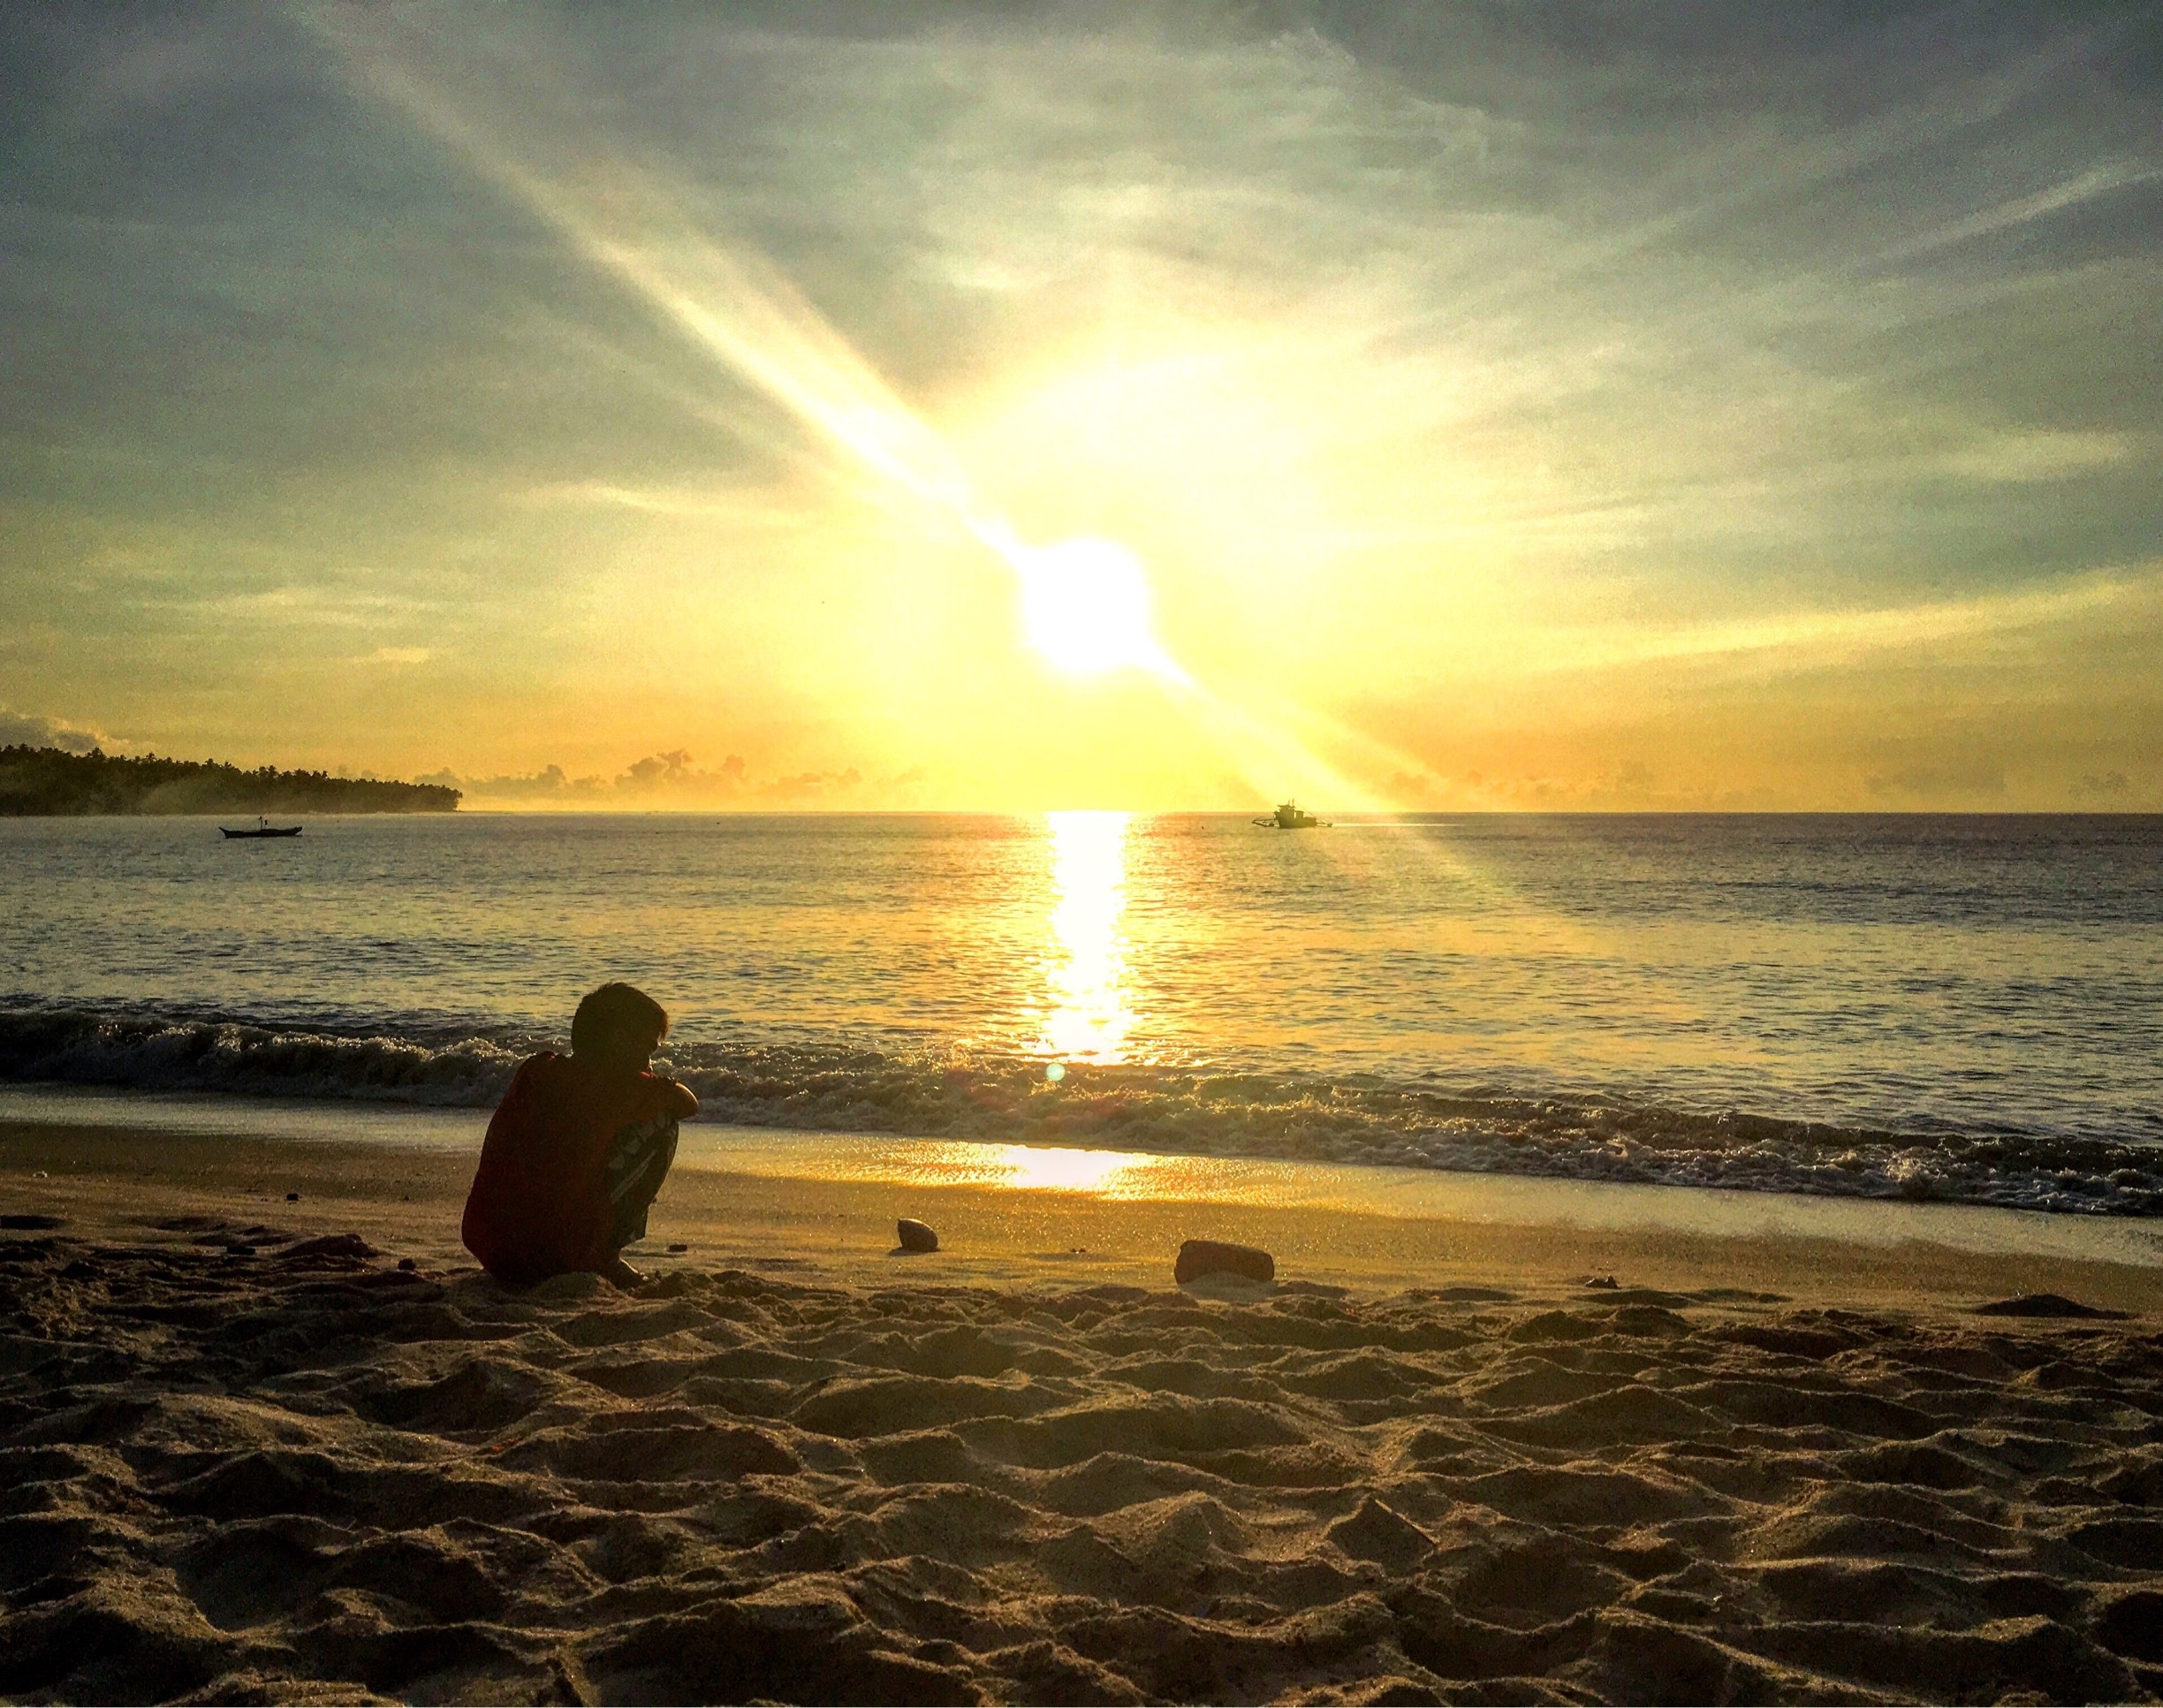 Mati Sunrise, trivia: the first sunlight shone in this millennia is located in Pusan Point Caraga Davao Oriental #sunrise #sun #beach #sea #morning #philippines #itsmorefuninthephilippines #davao #mati #travel #travelasia